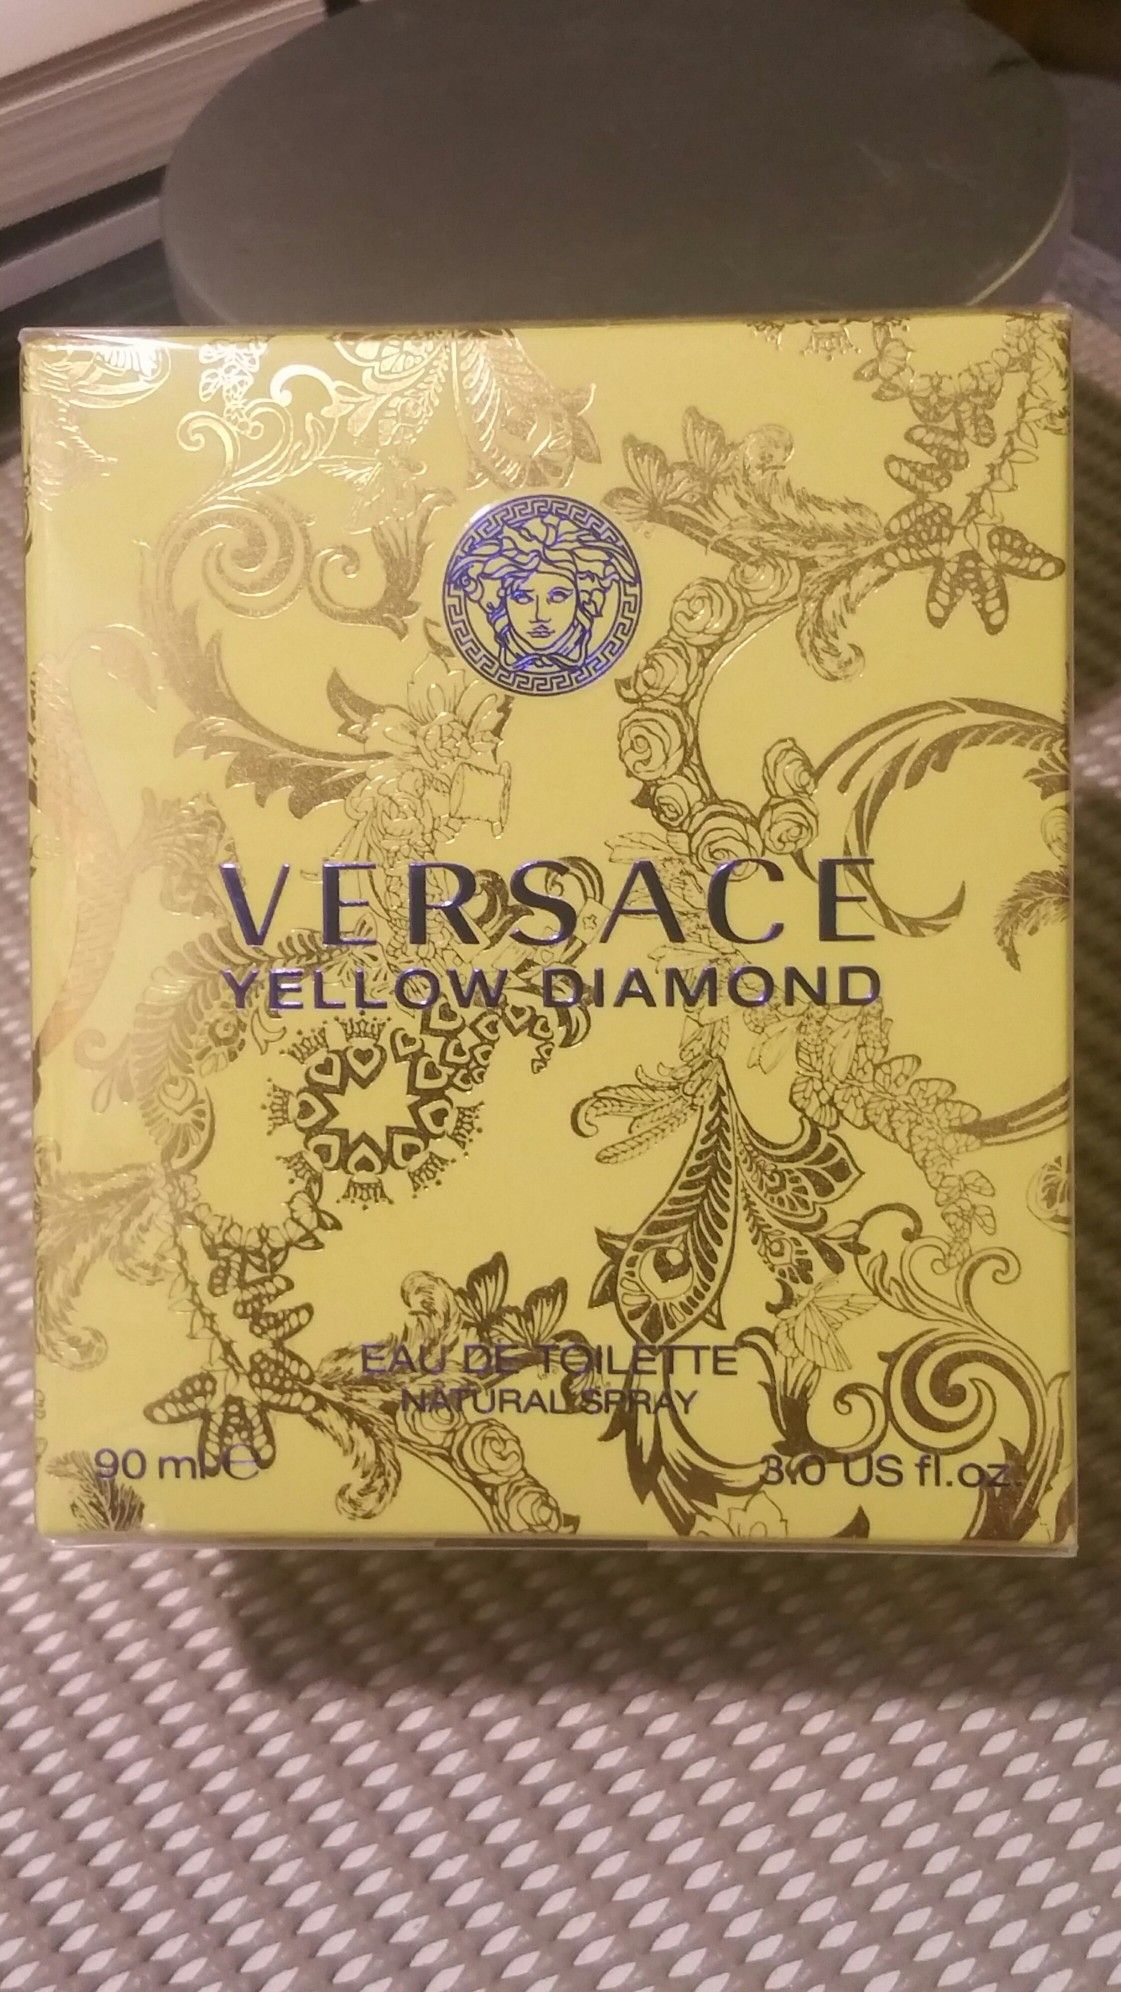 FIRM $48.00 "Yellow Diamond"' by Versace, 3.0oz Eau de Toilette.